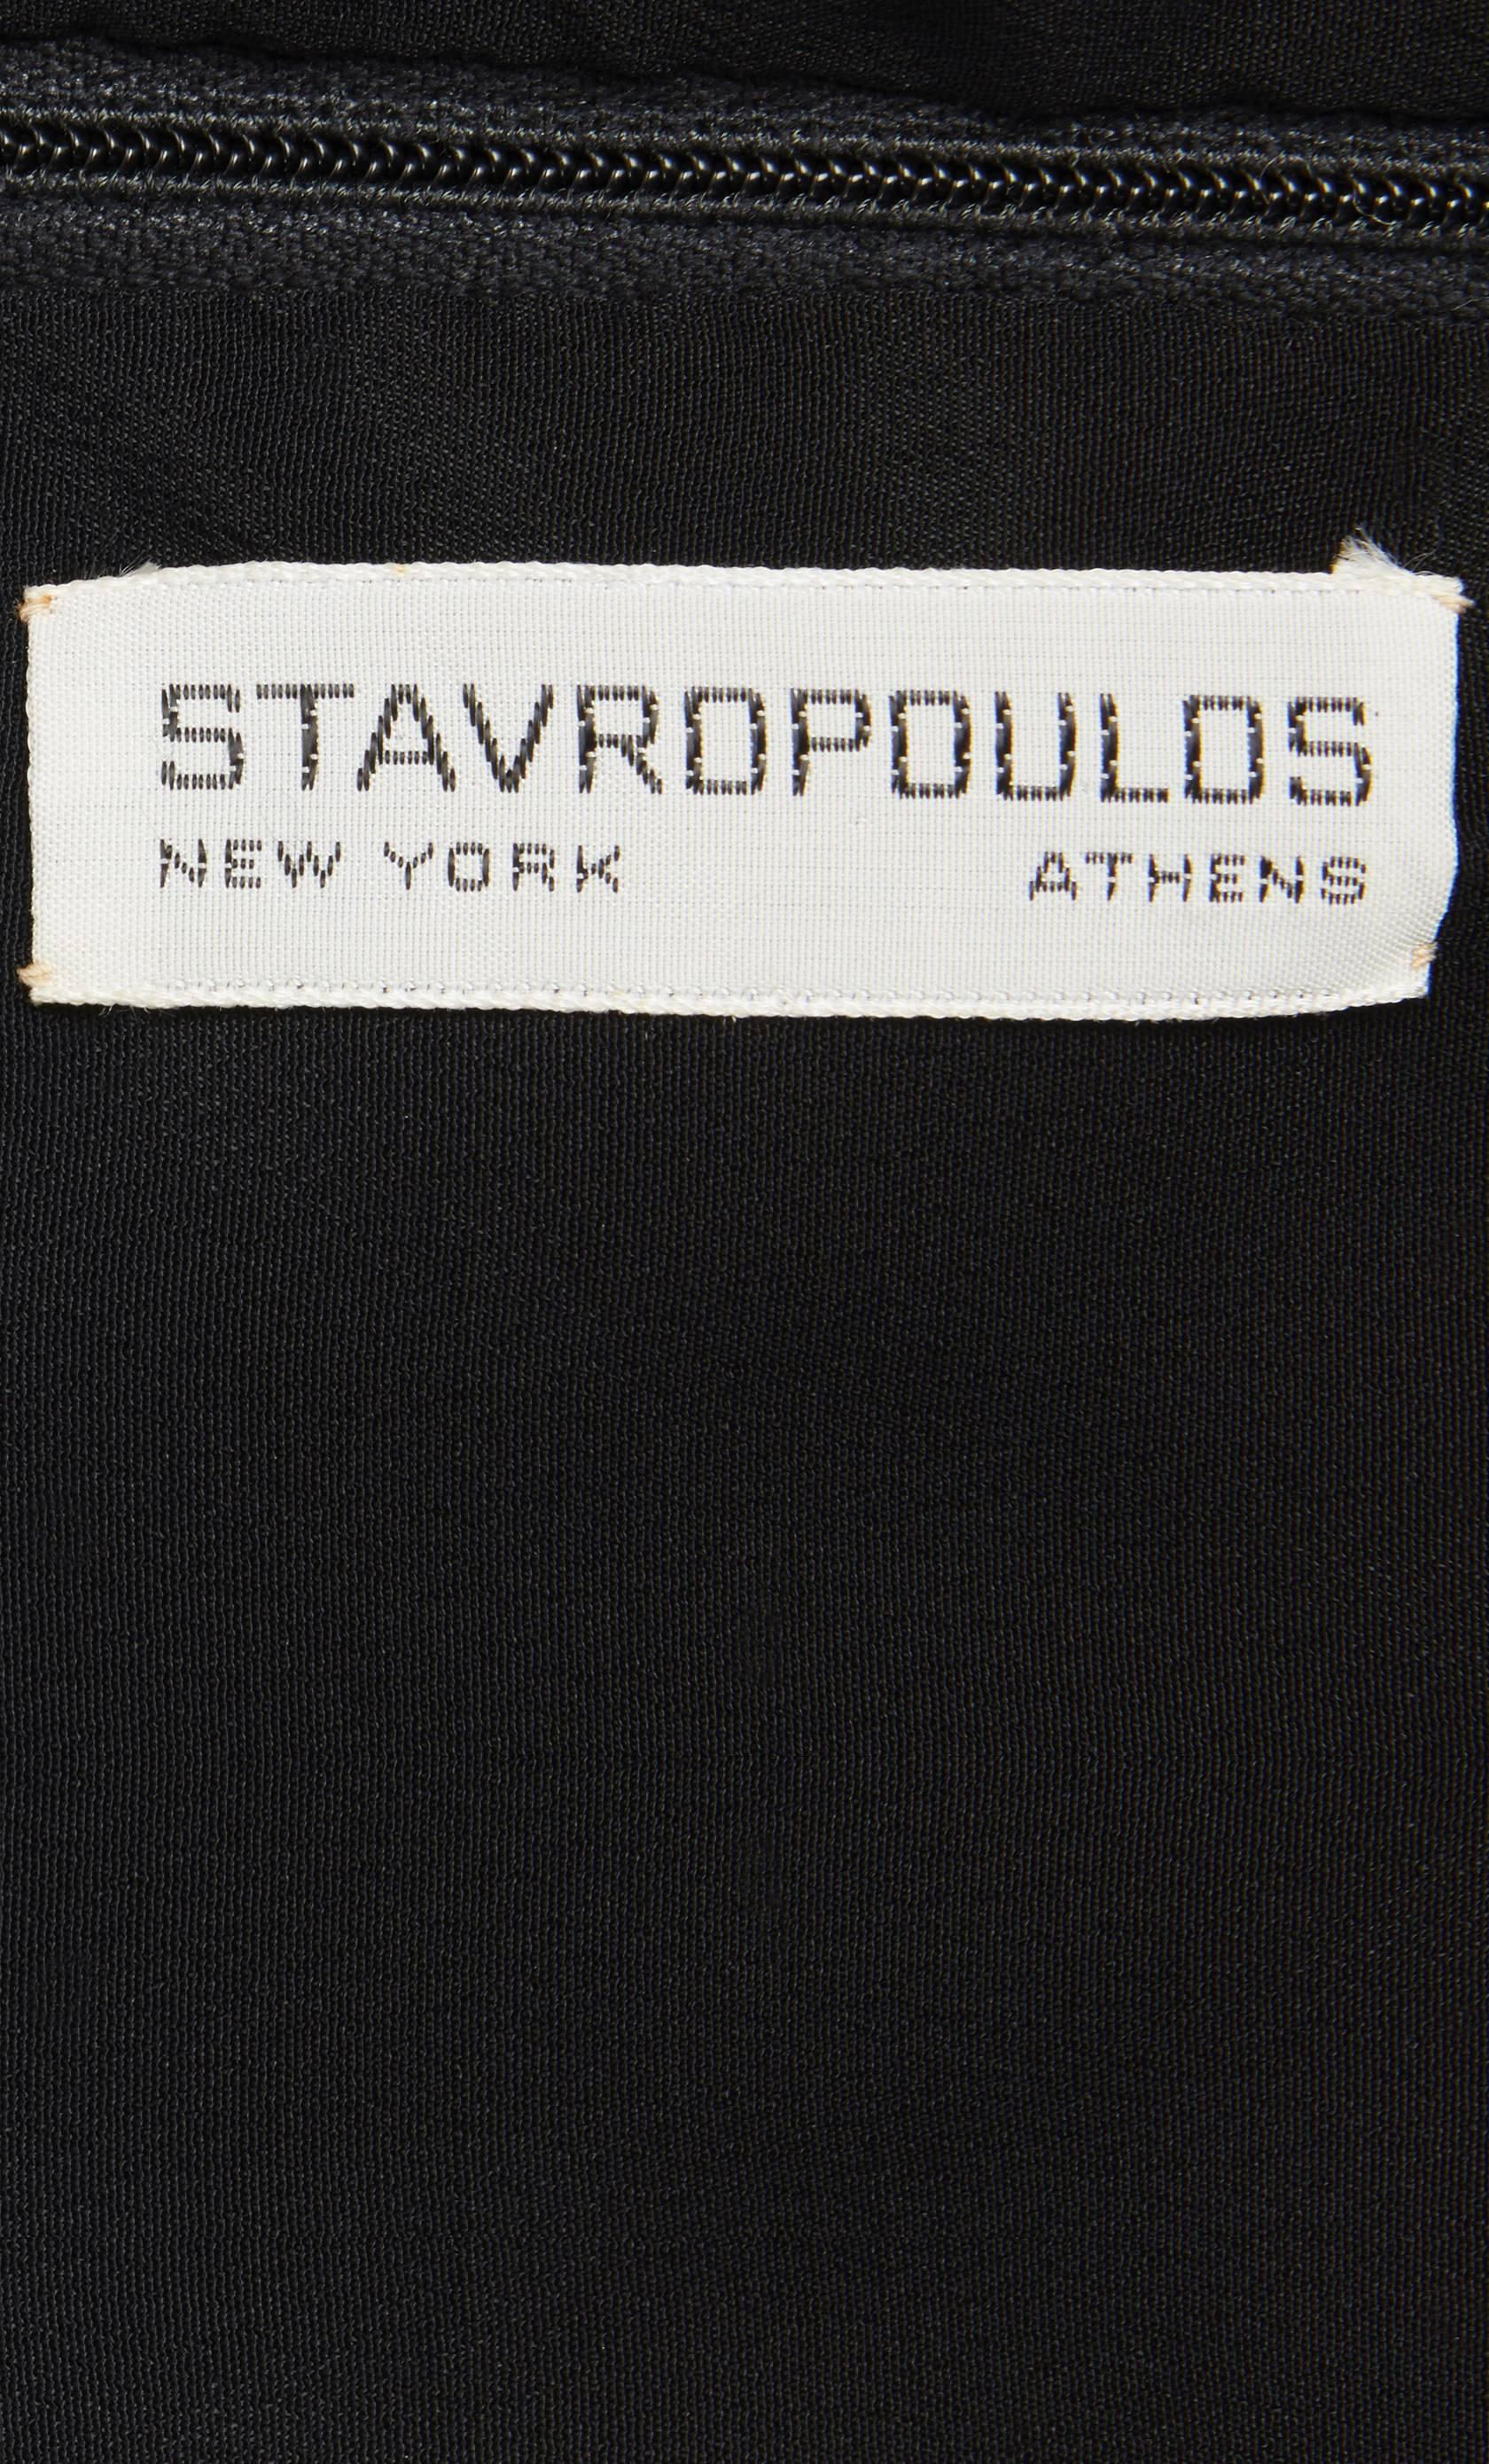 Women's Stavropoulos black chiffon dress, circa 1975